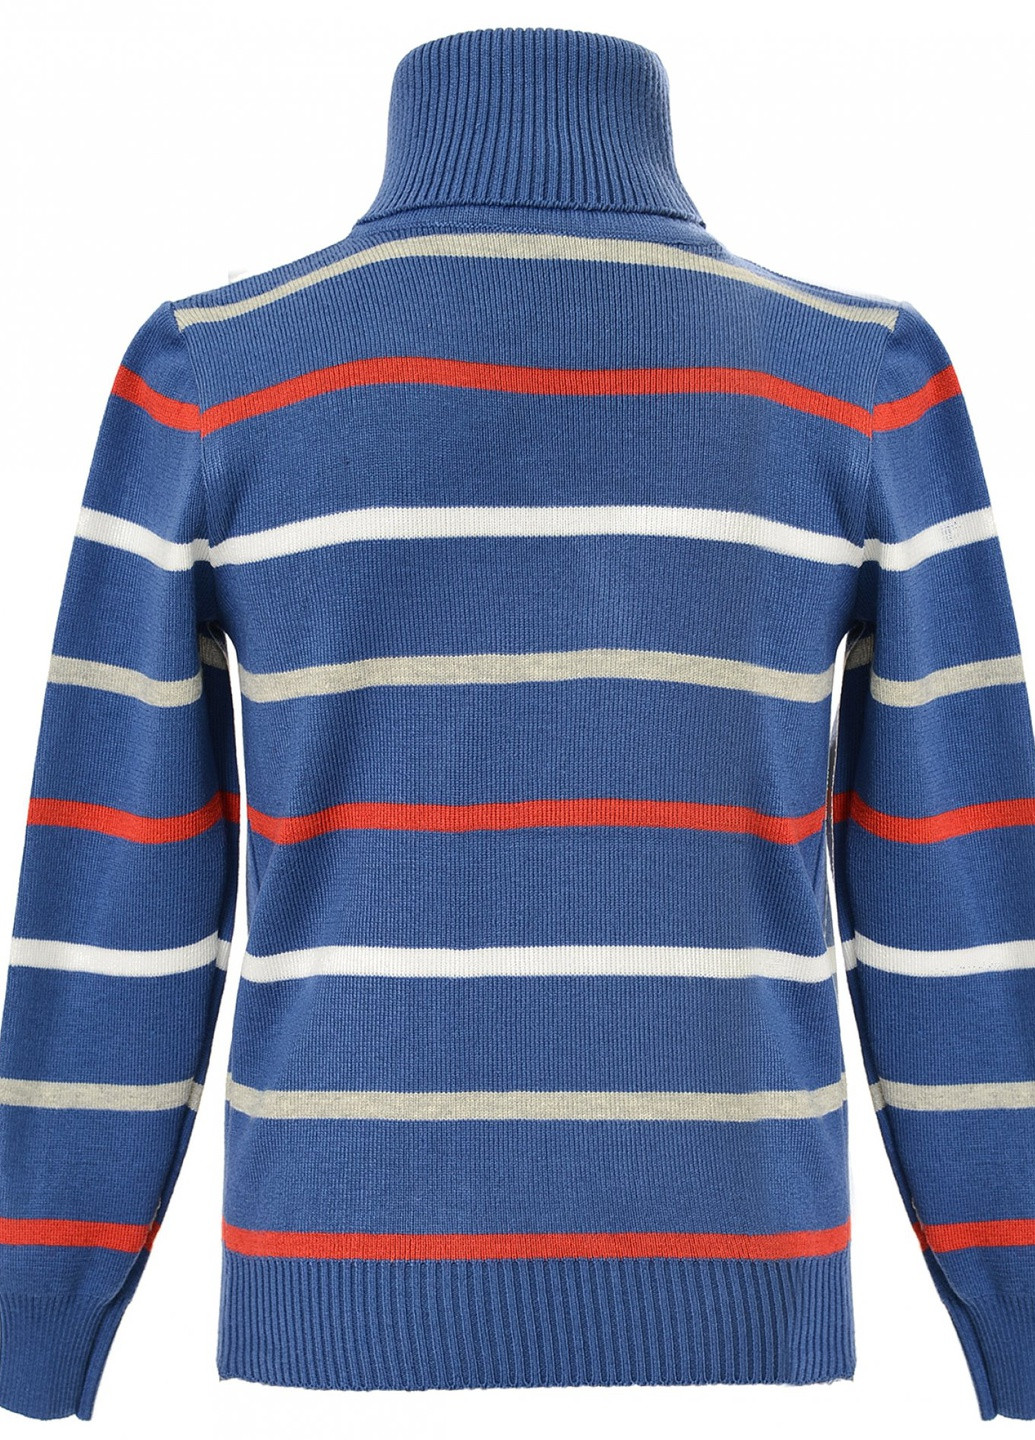 Синій светри светр в смужку на хлопчика (свитер полоска)14729-681 Lemanta